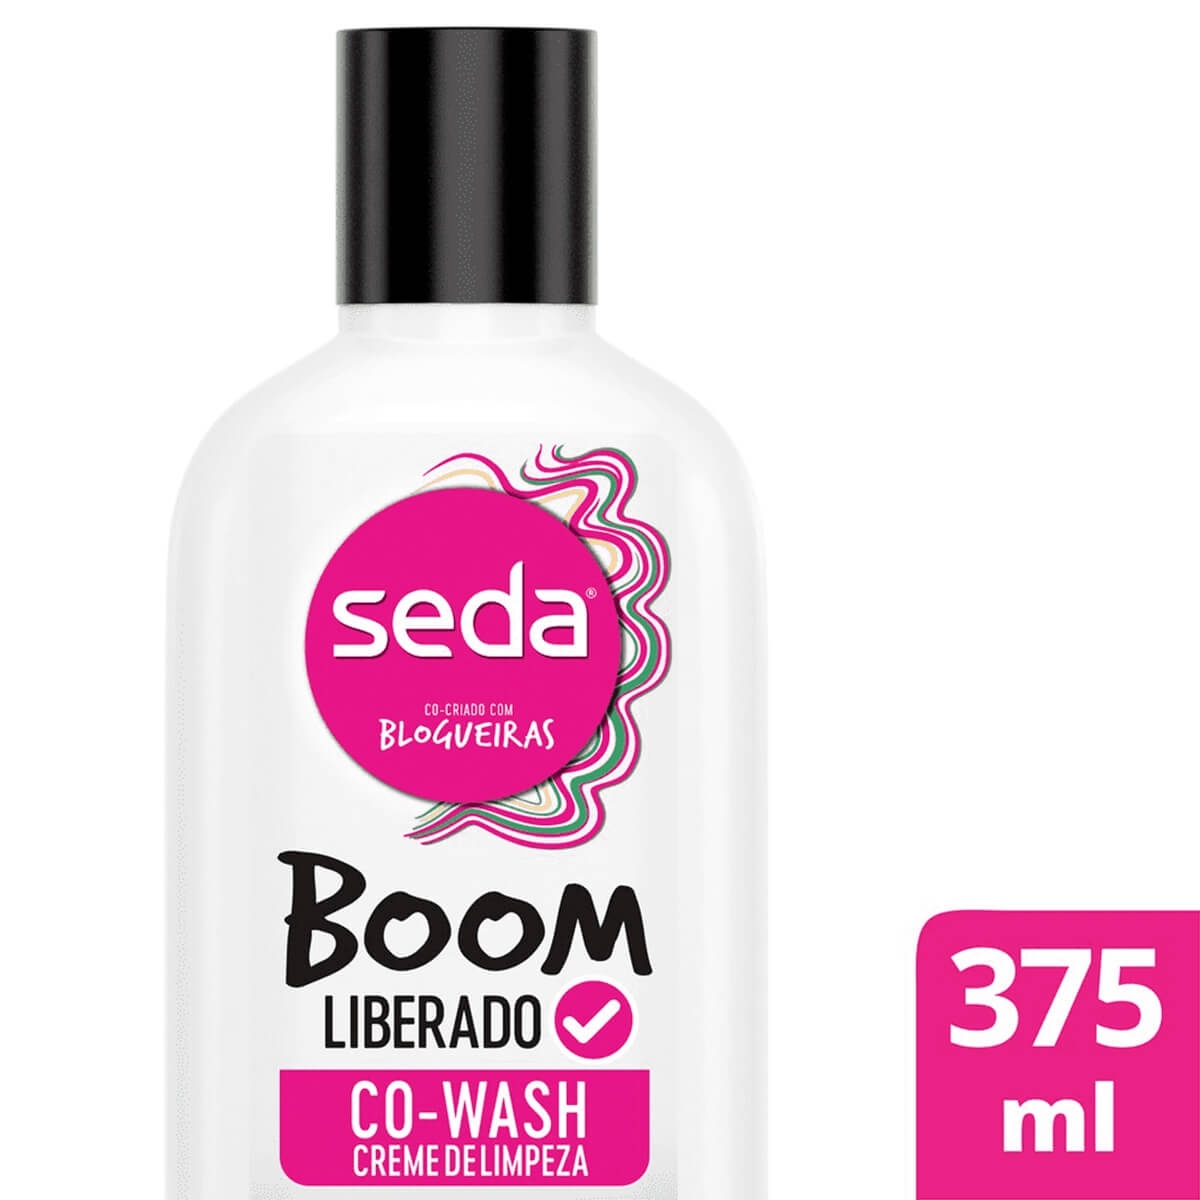 Creme de Limpeza Seda Boom Liberado 3 em 1 Co-Wash 375ml